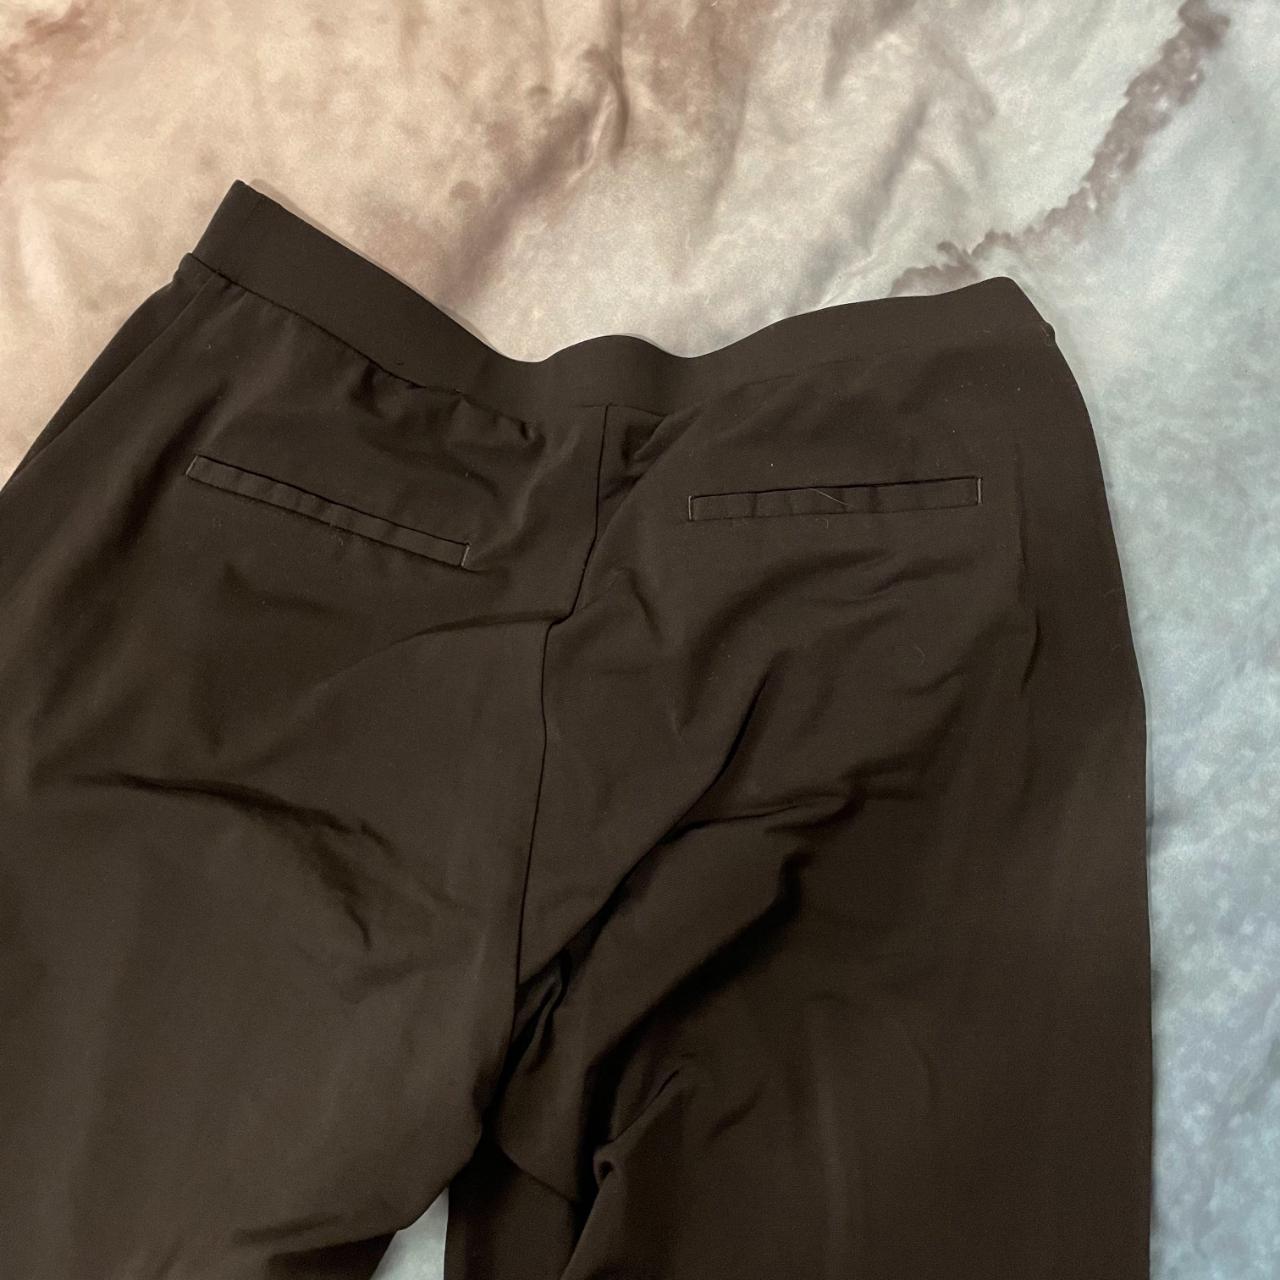 Product Image 3 - Express women's dress pants/trousers, size